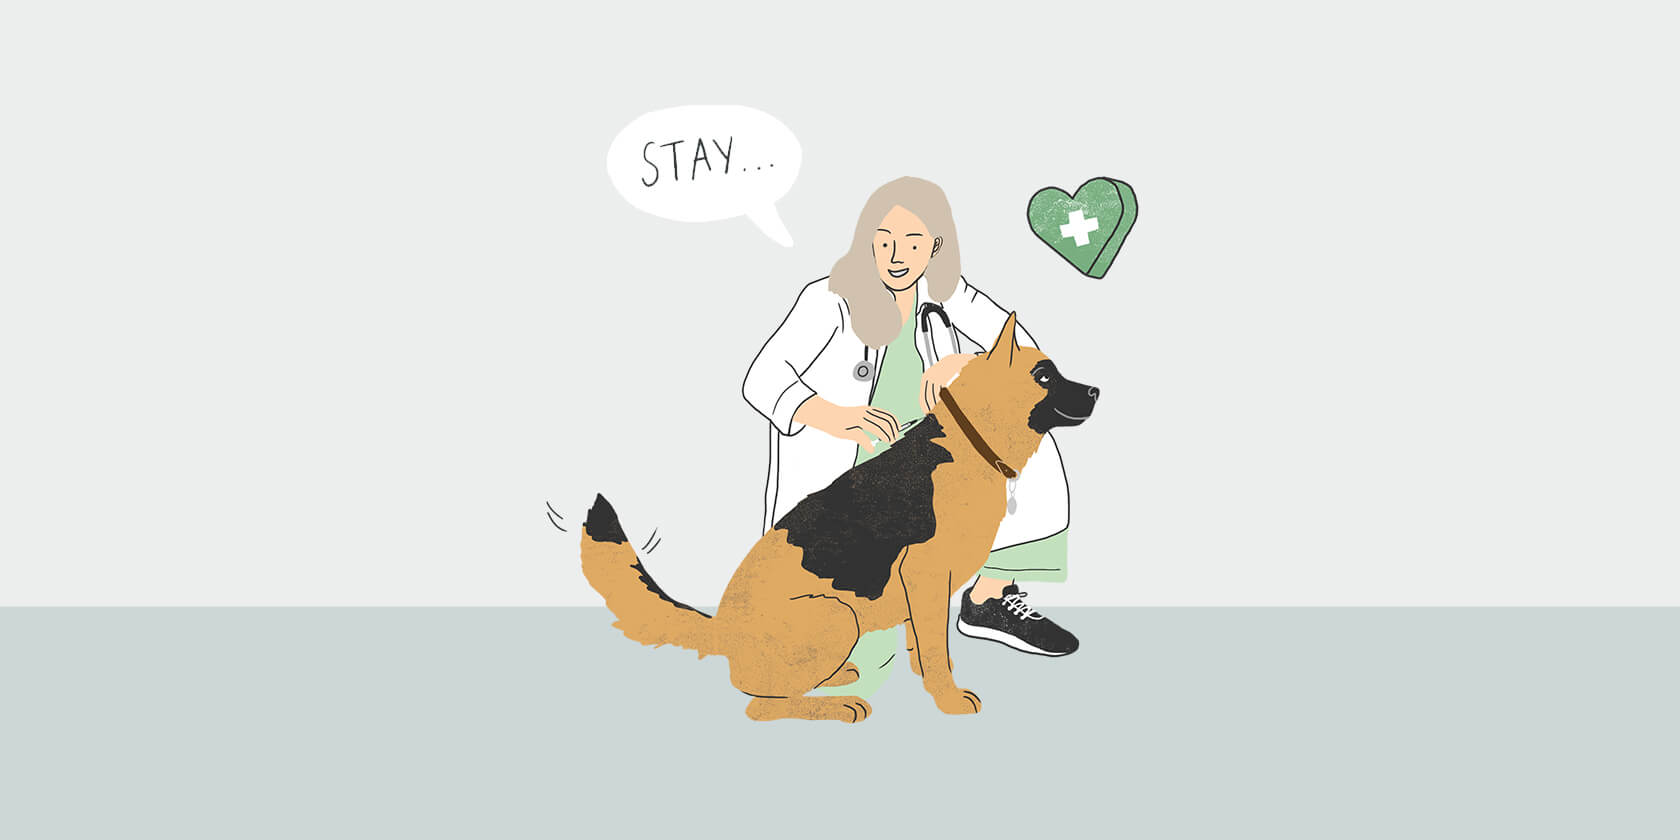 Veterinarian vaccinating dog